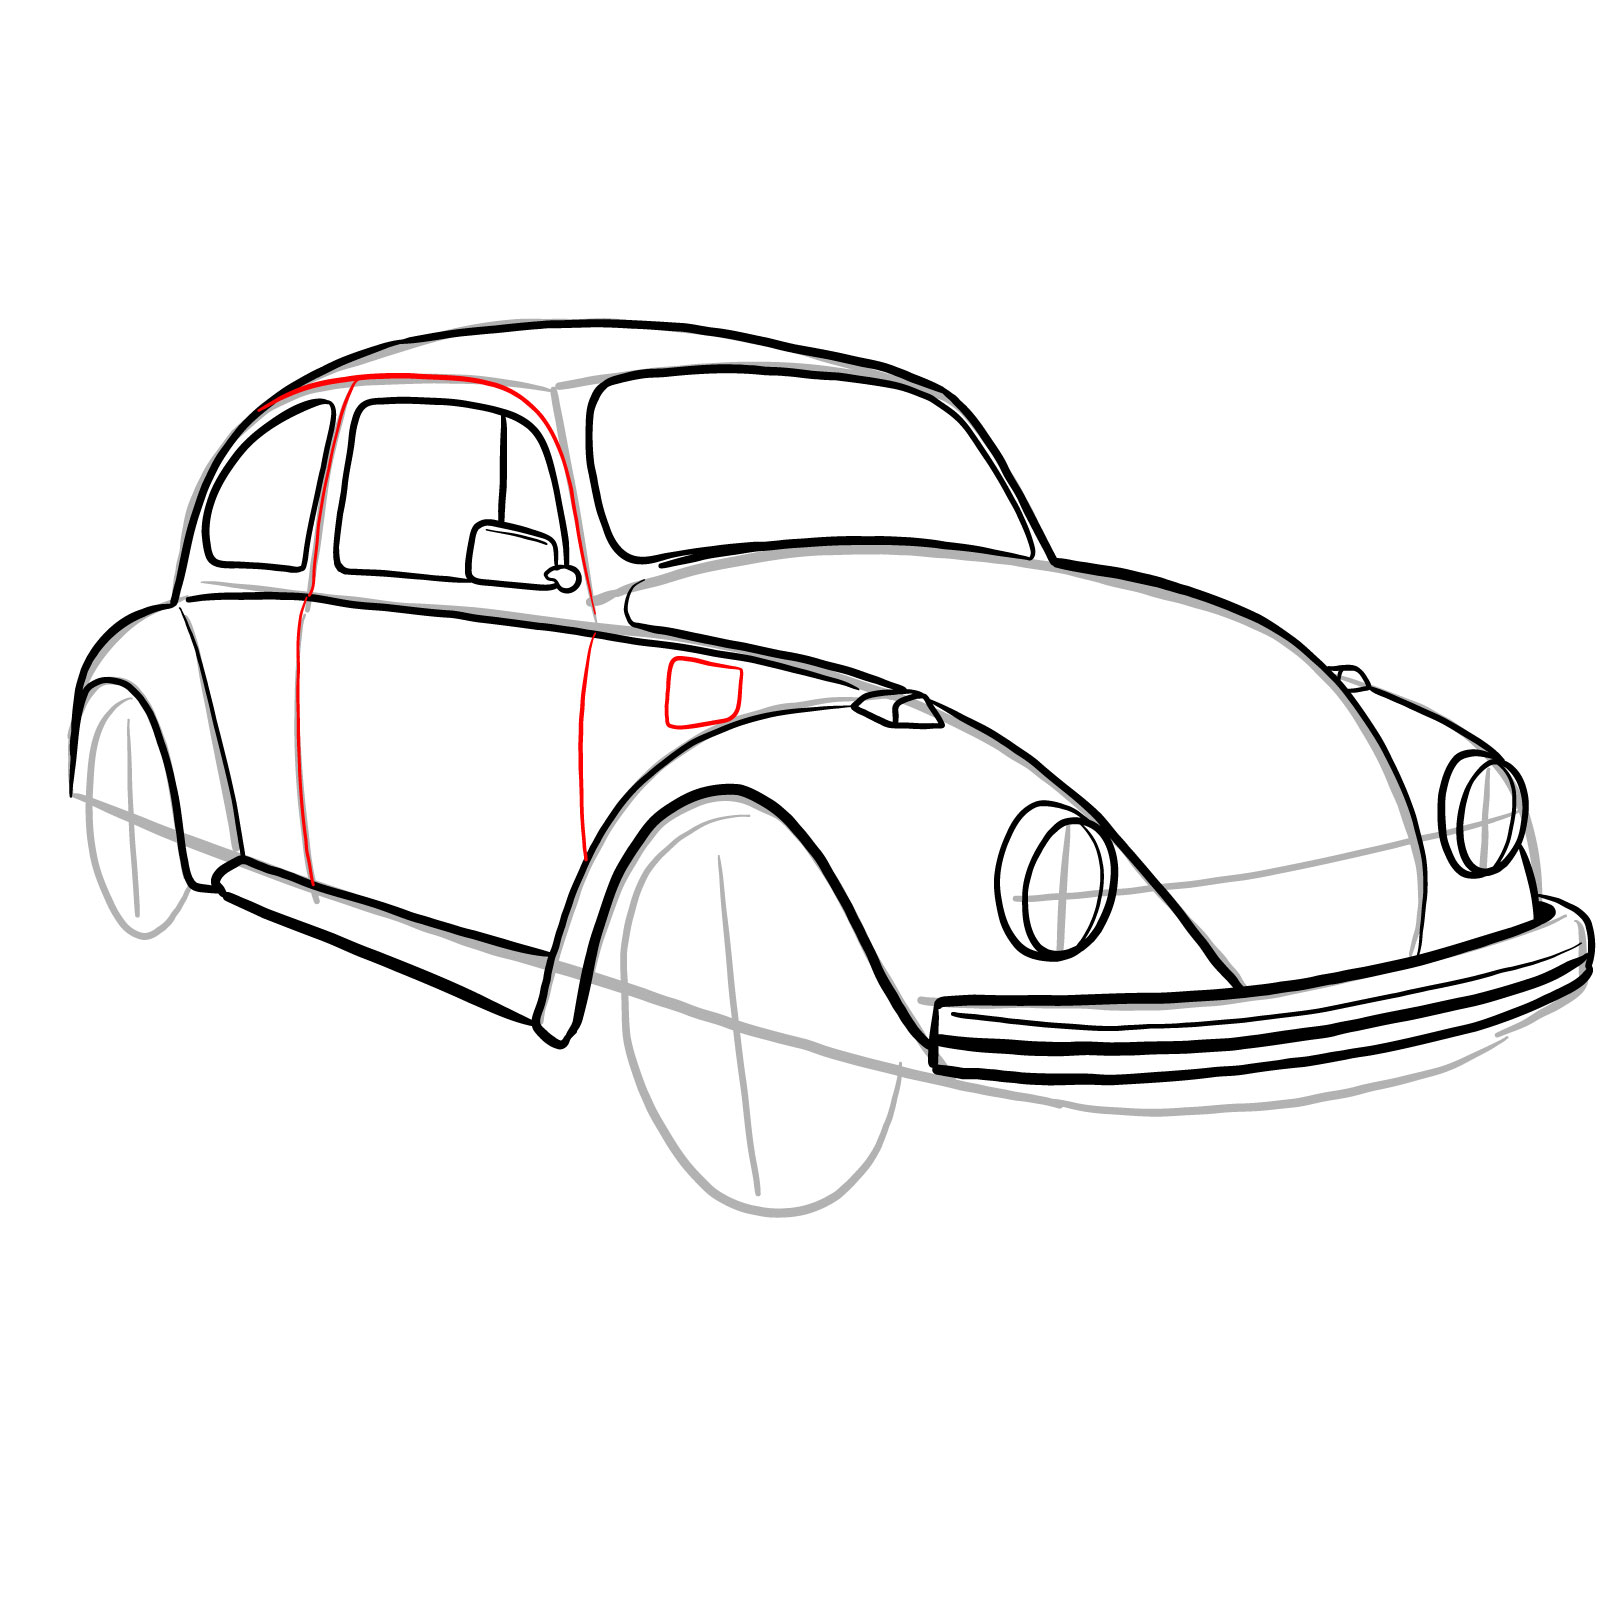 How to draw Volkswagen Beetle 1972 - step 23